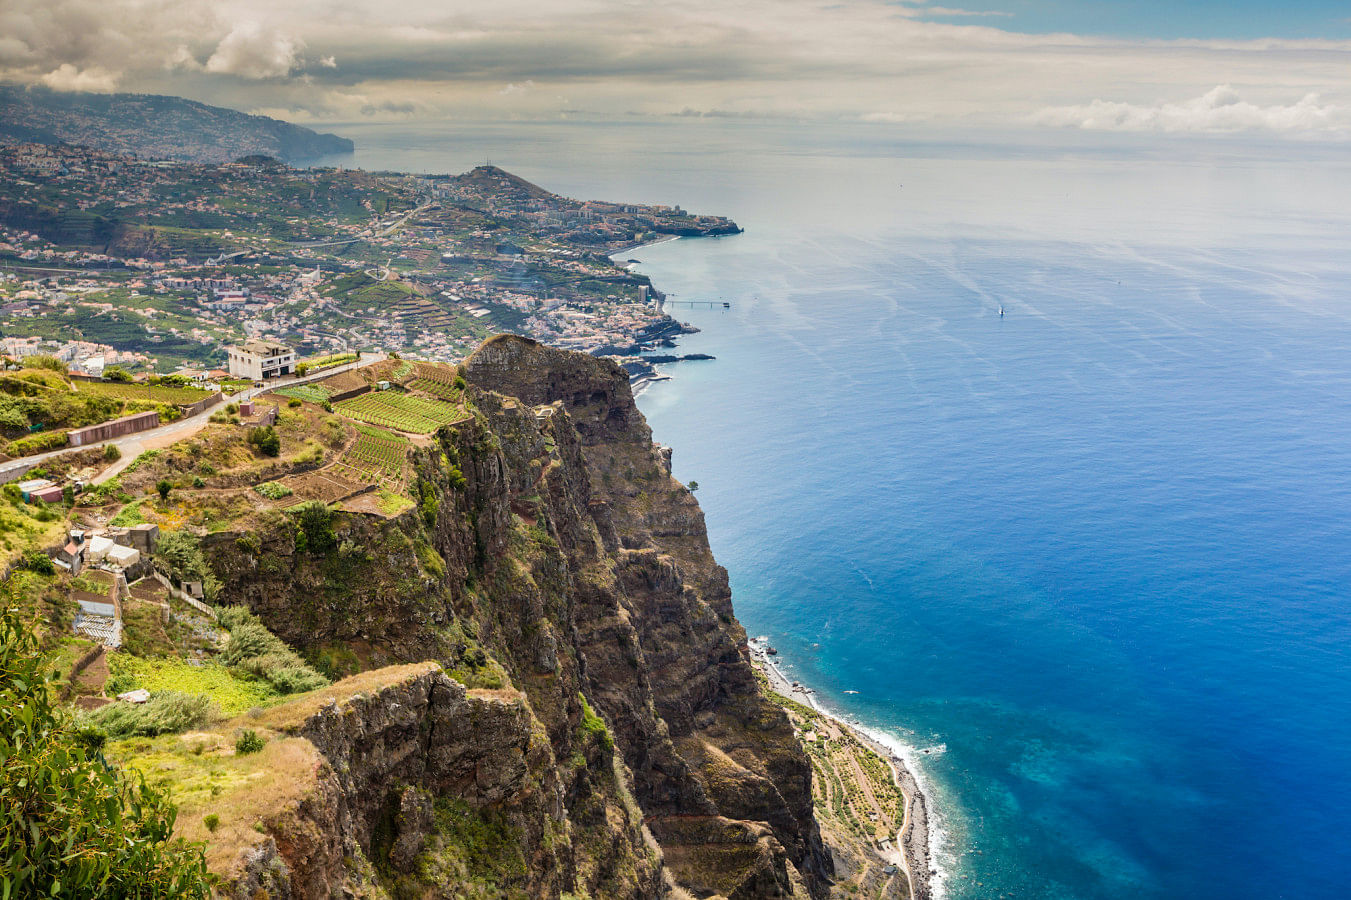 Lej en båd i øen Madeira